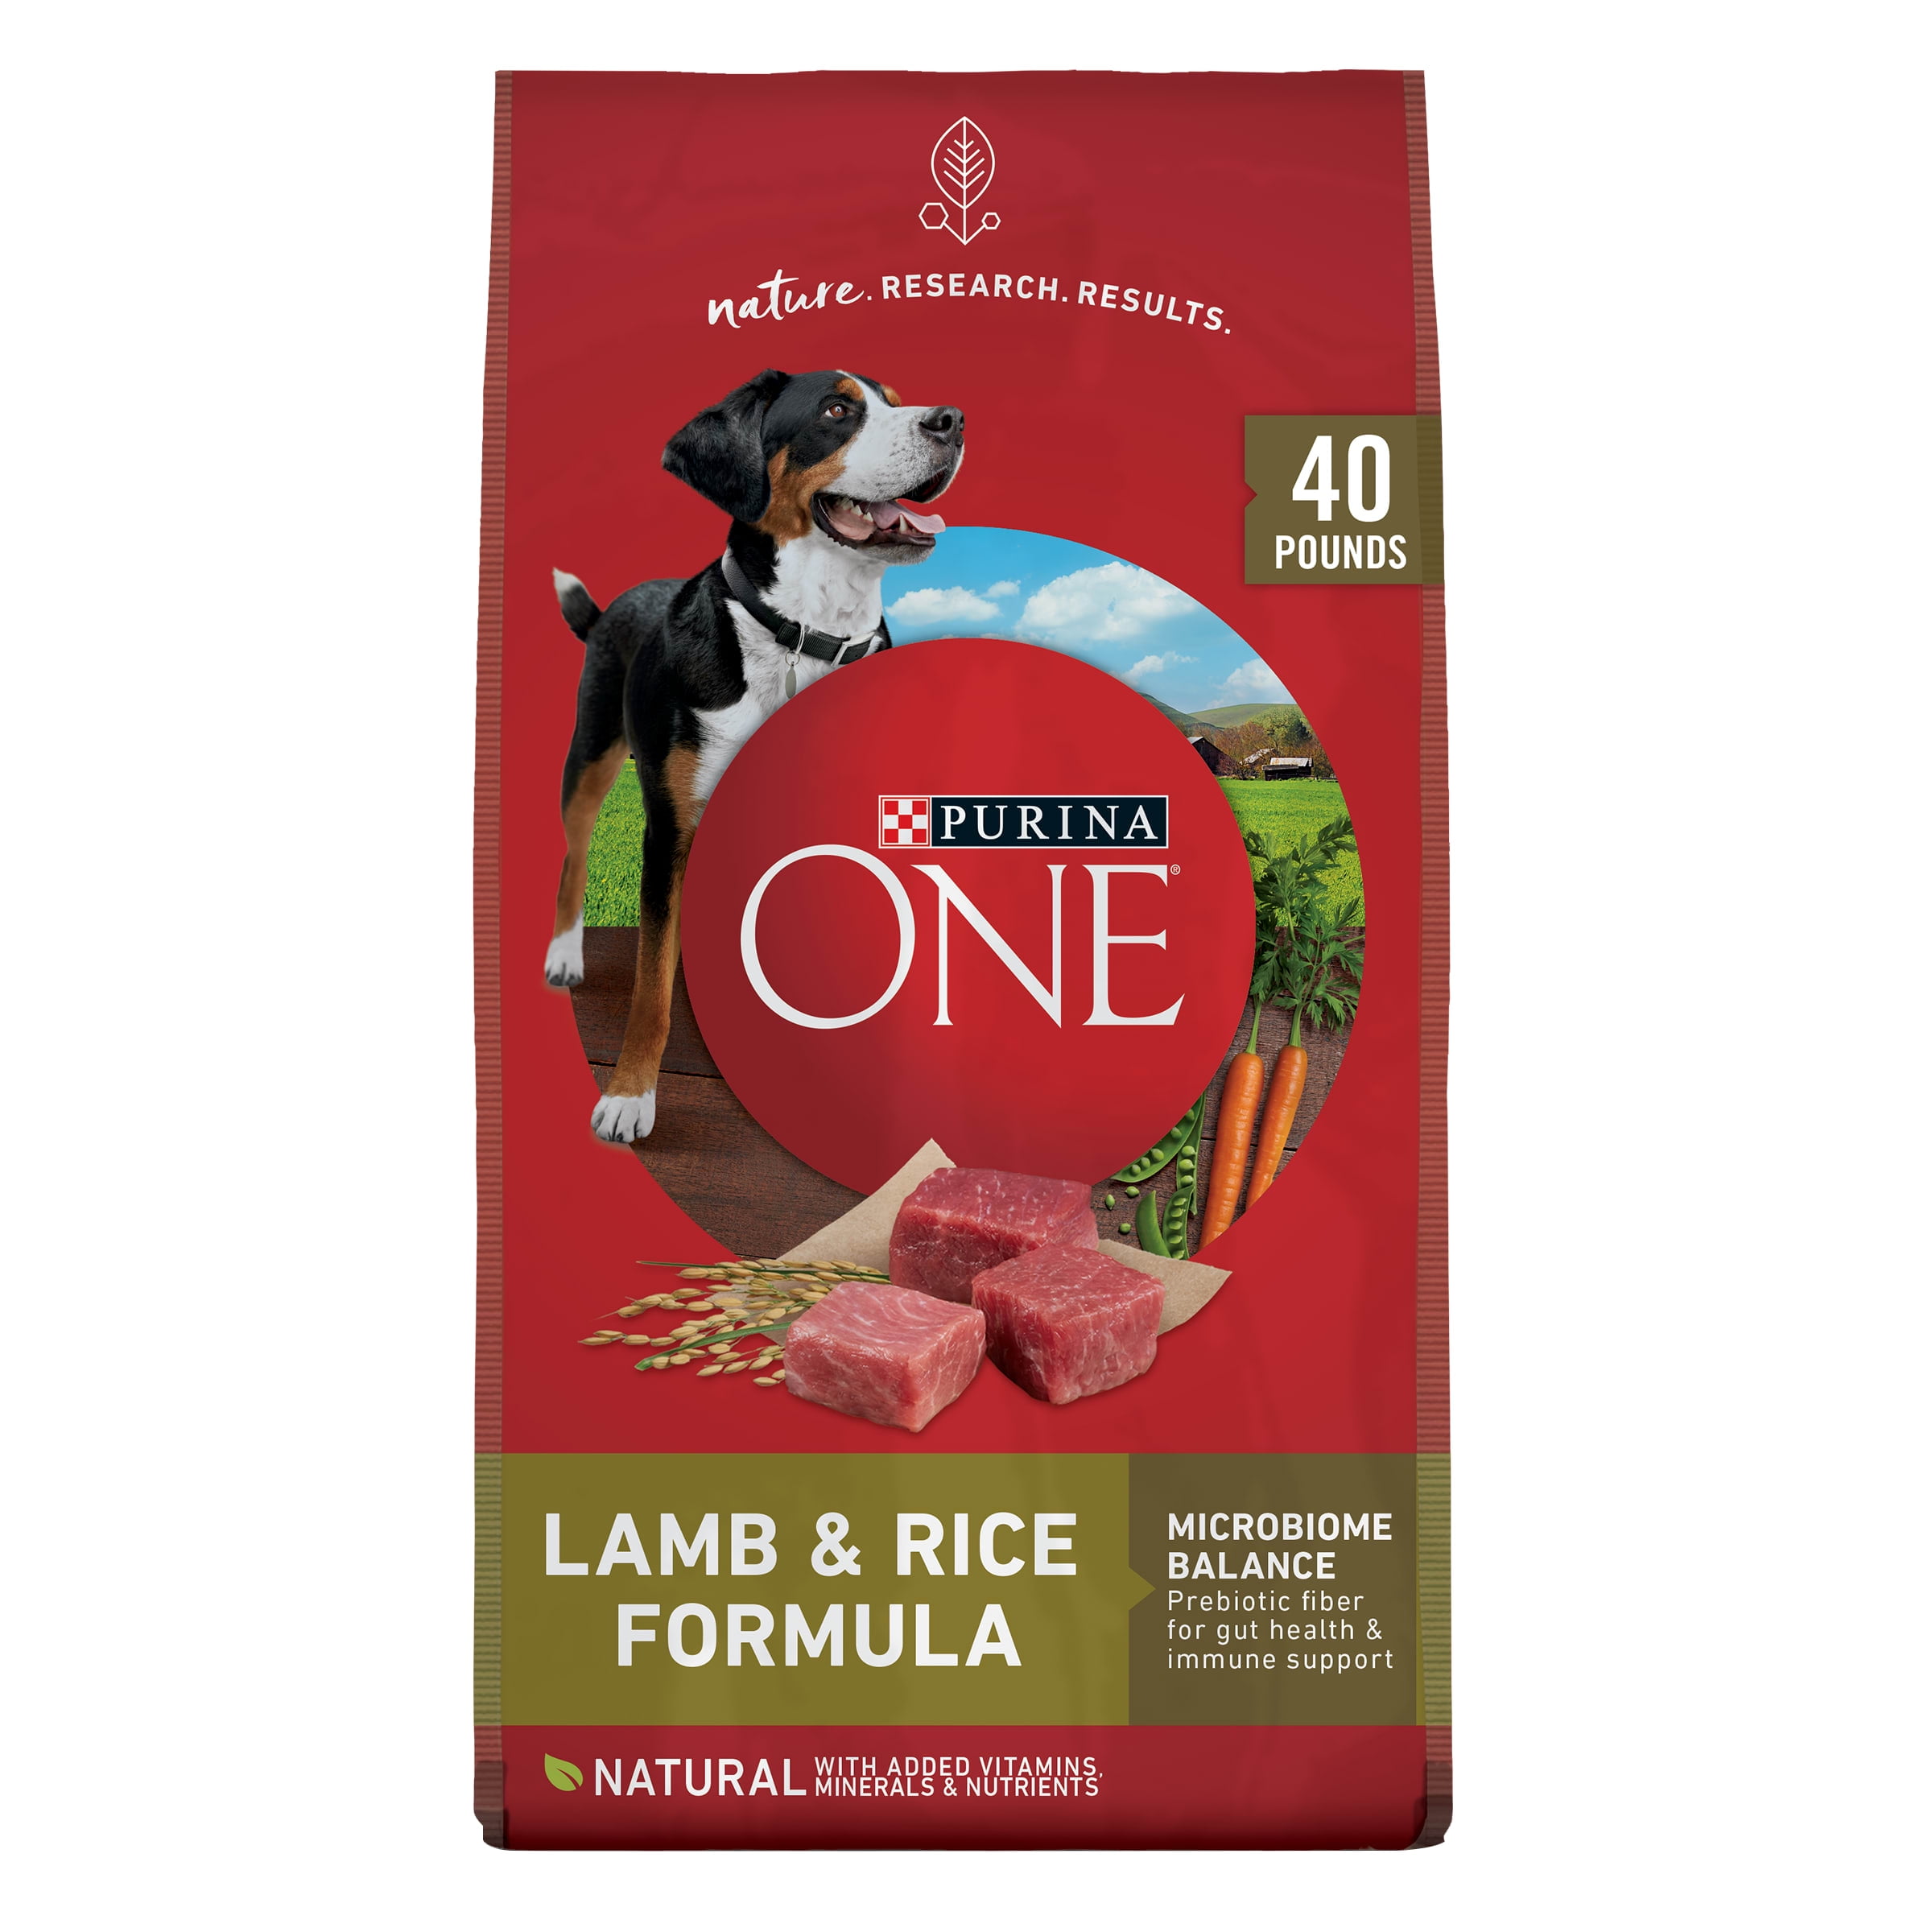 Preek anders eten Purina ONE Dry Dog Food Lamb and Rice Formula - Walmart.com